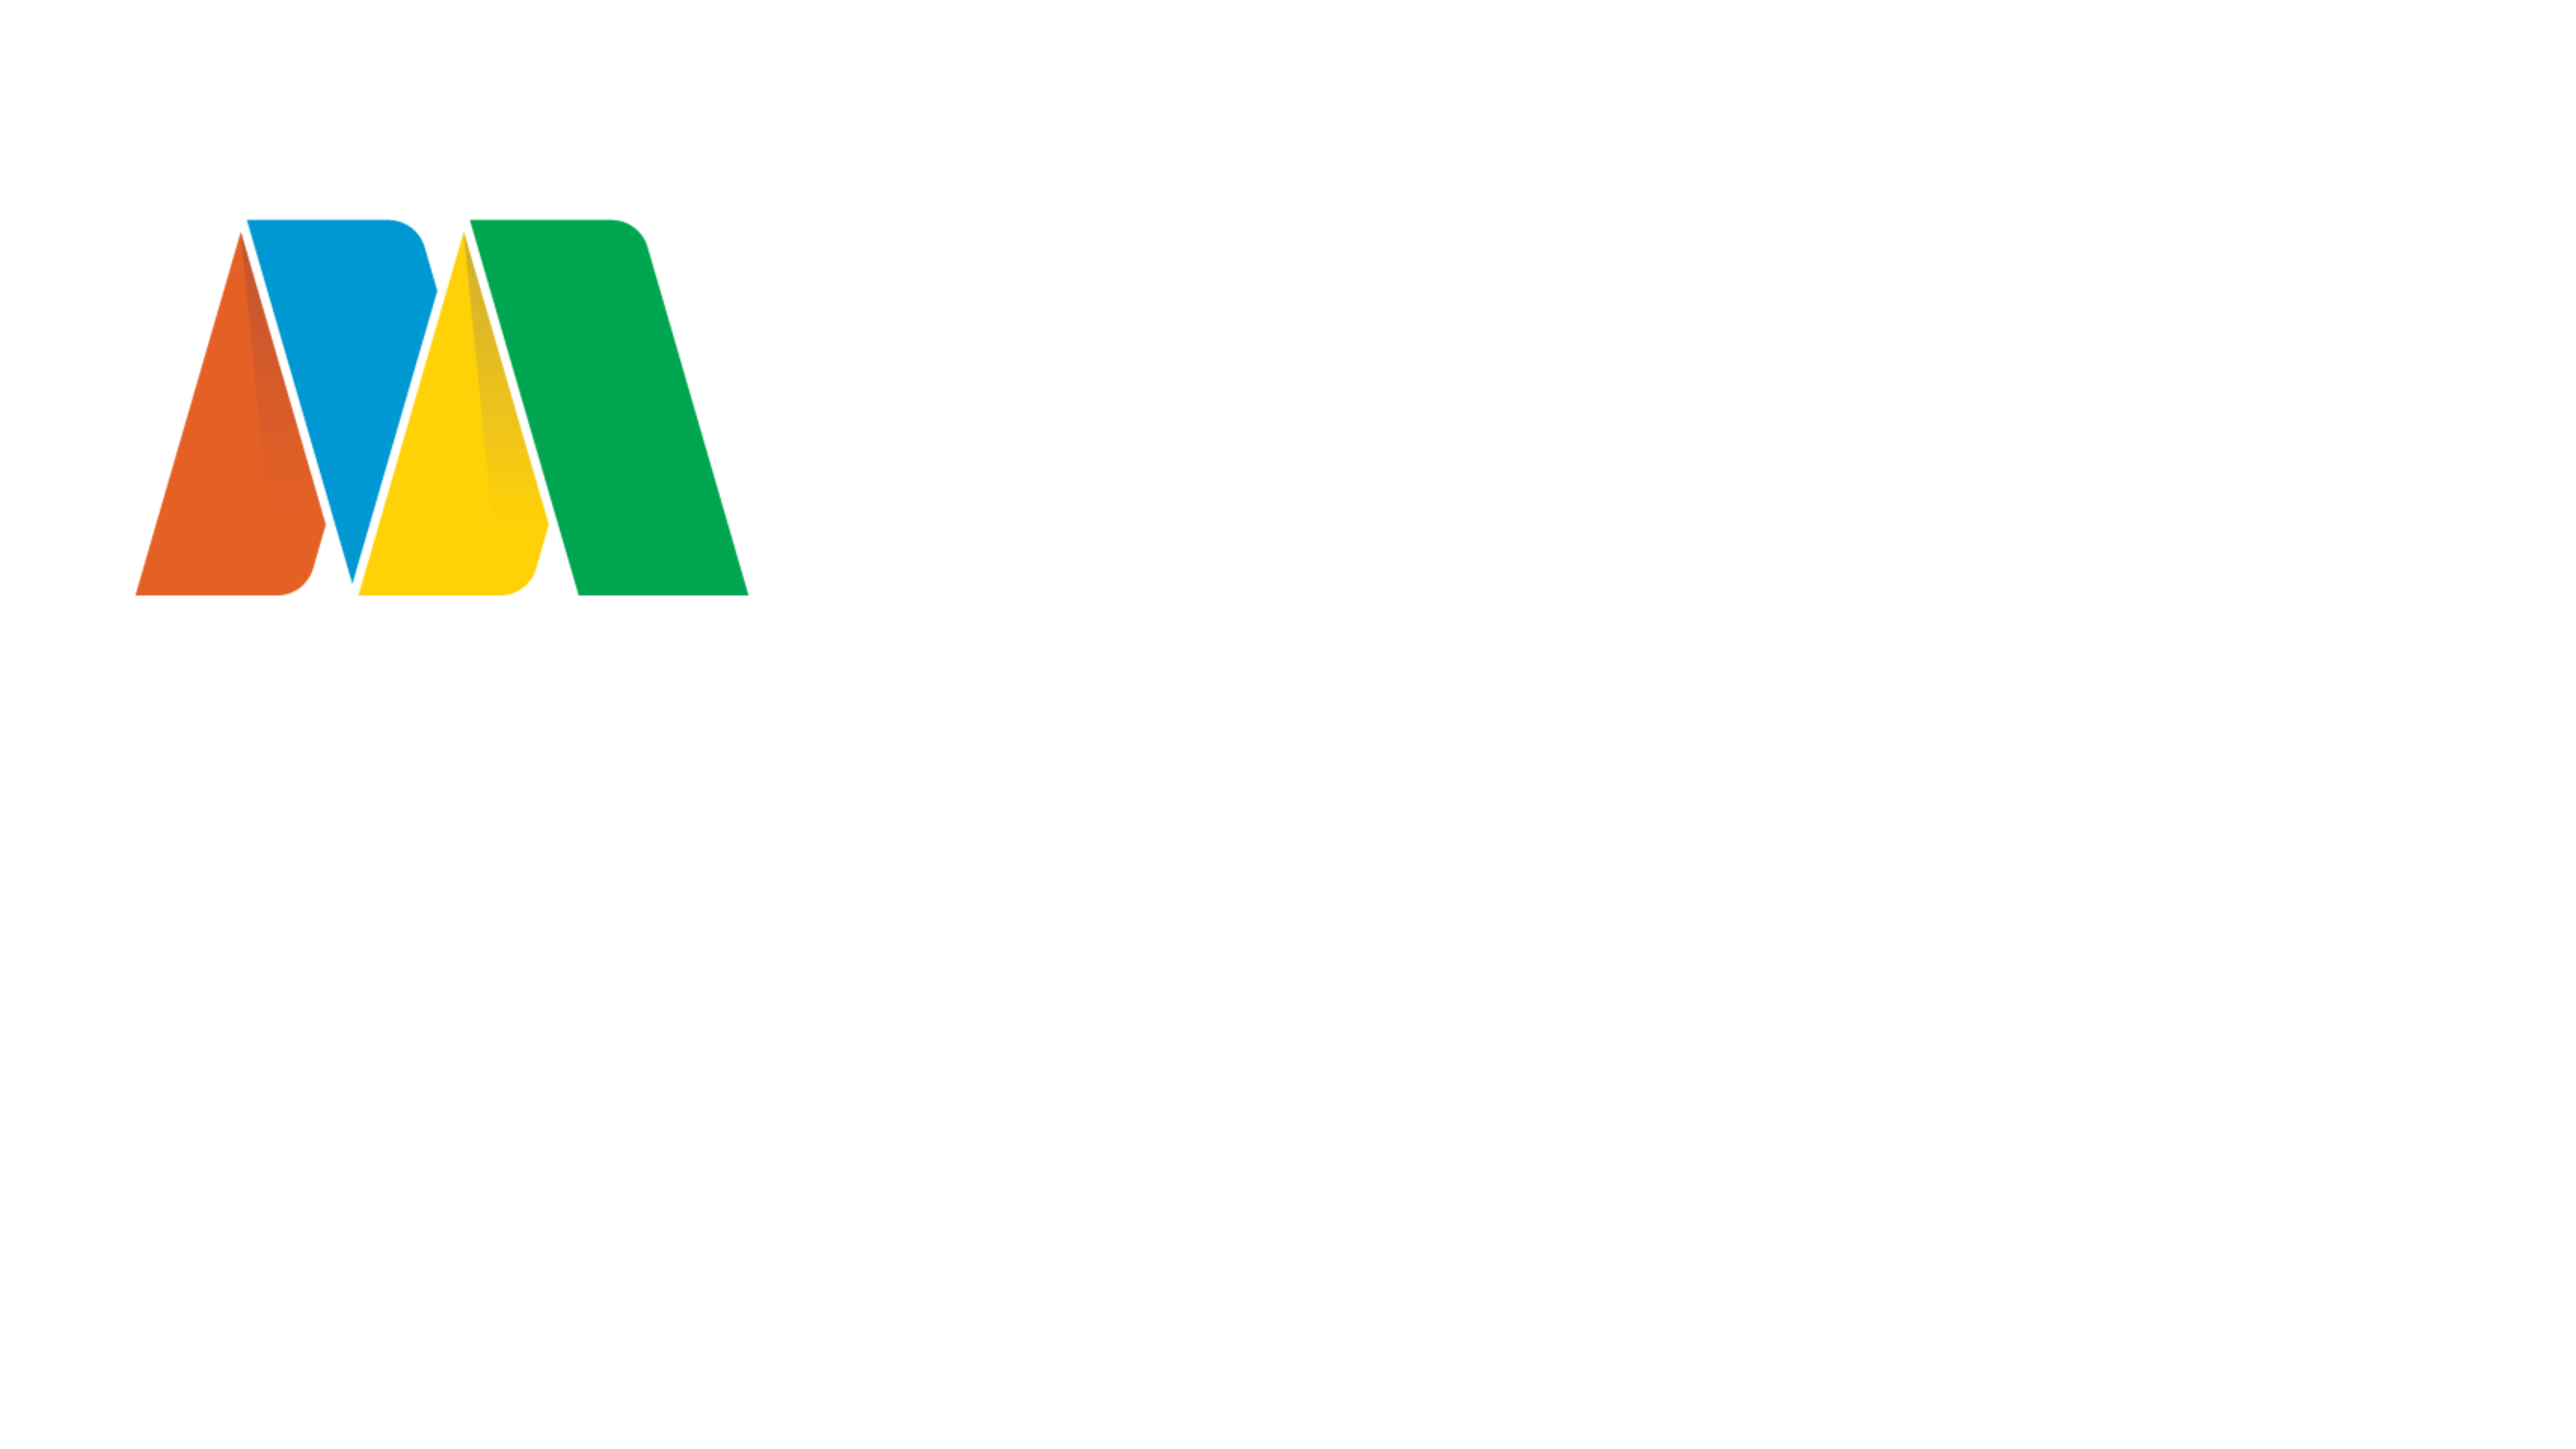 Medical Informatics Engineering